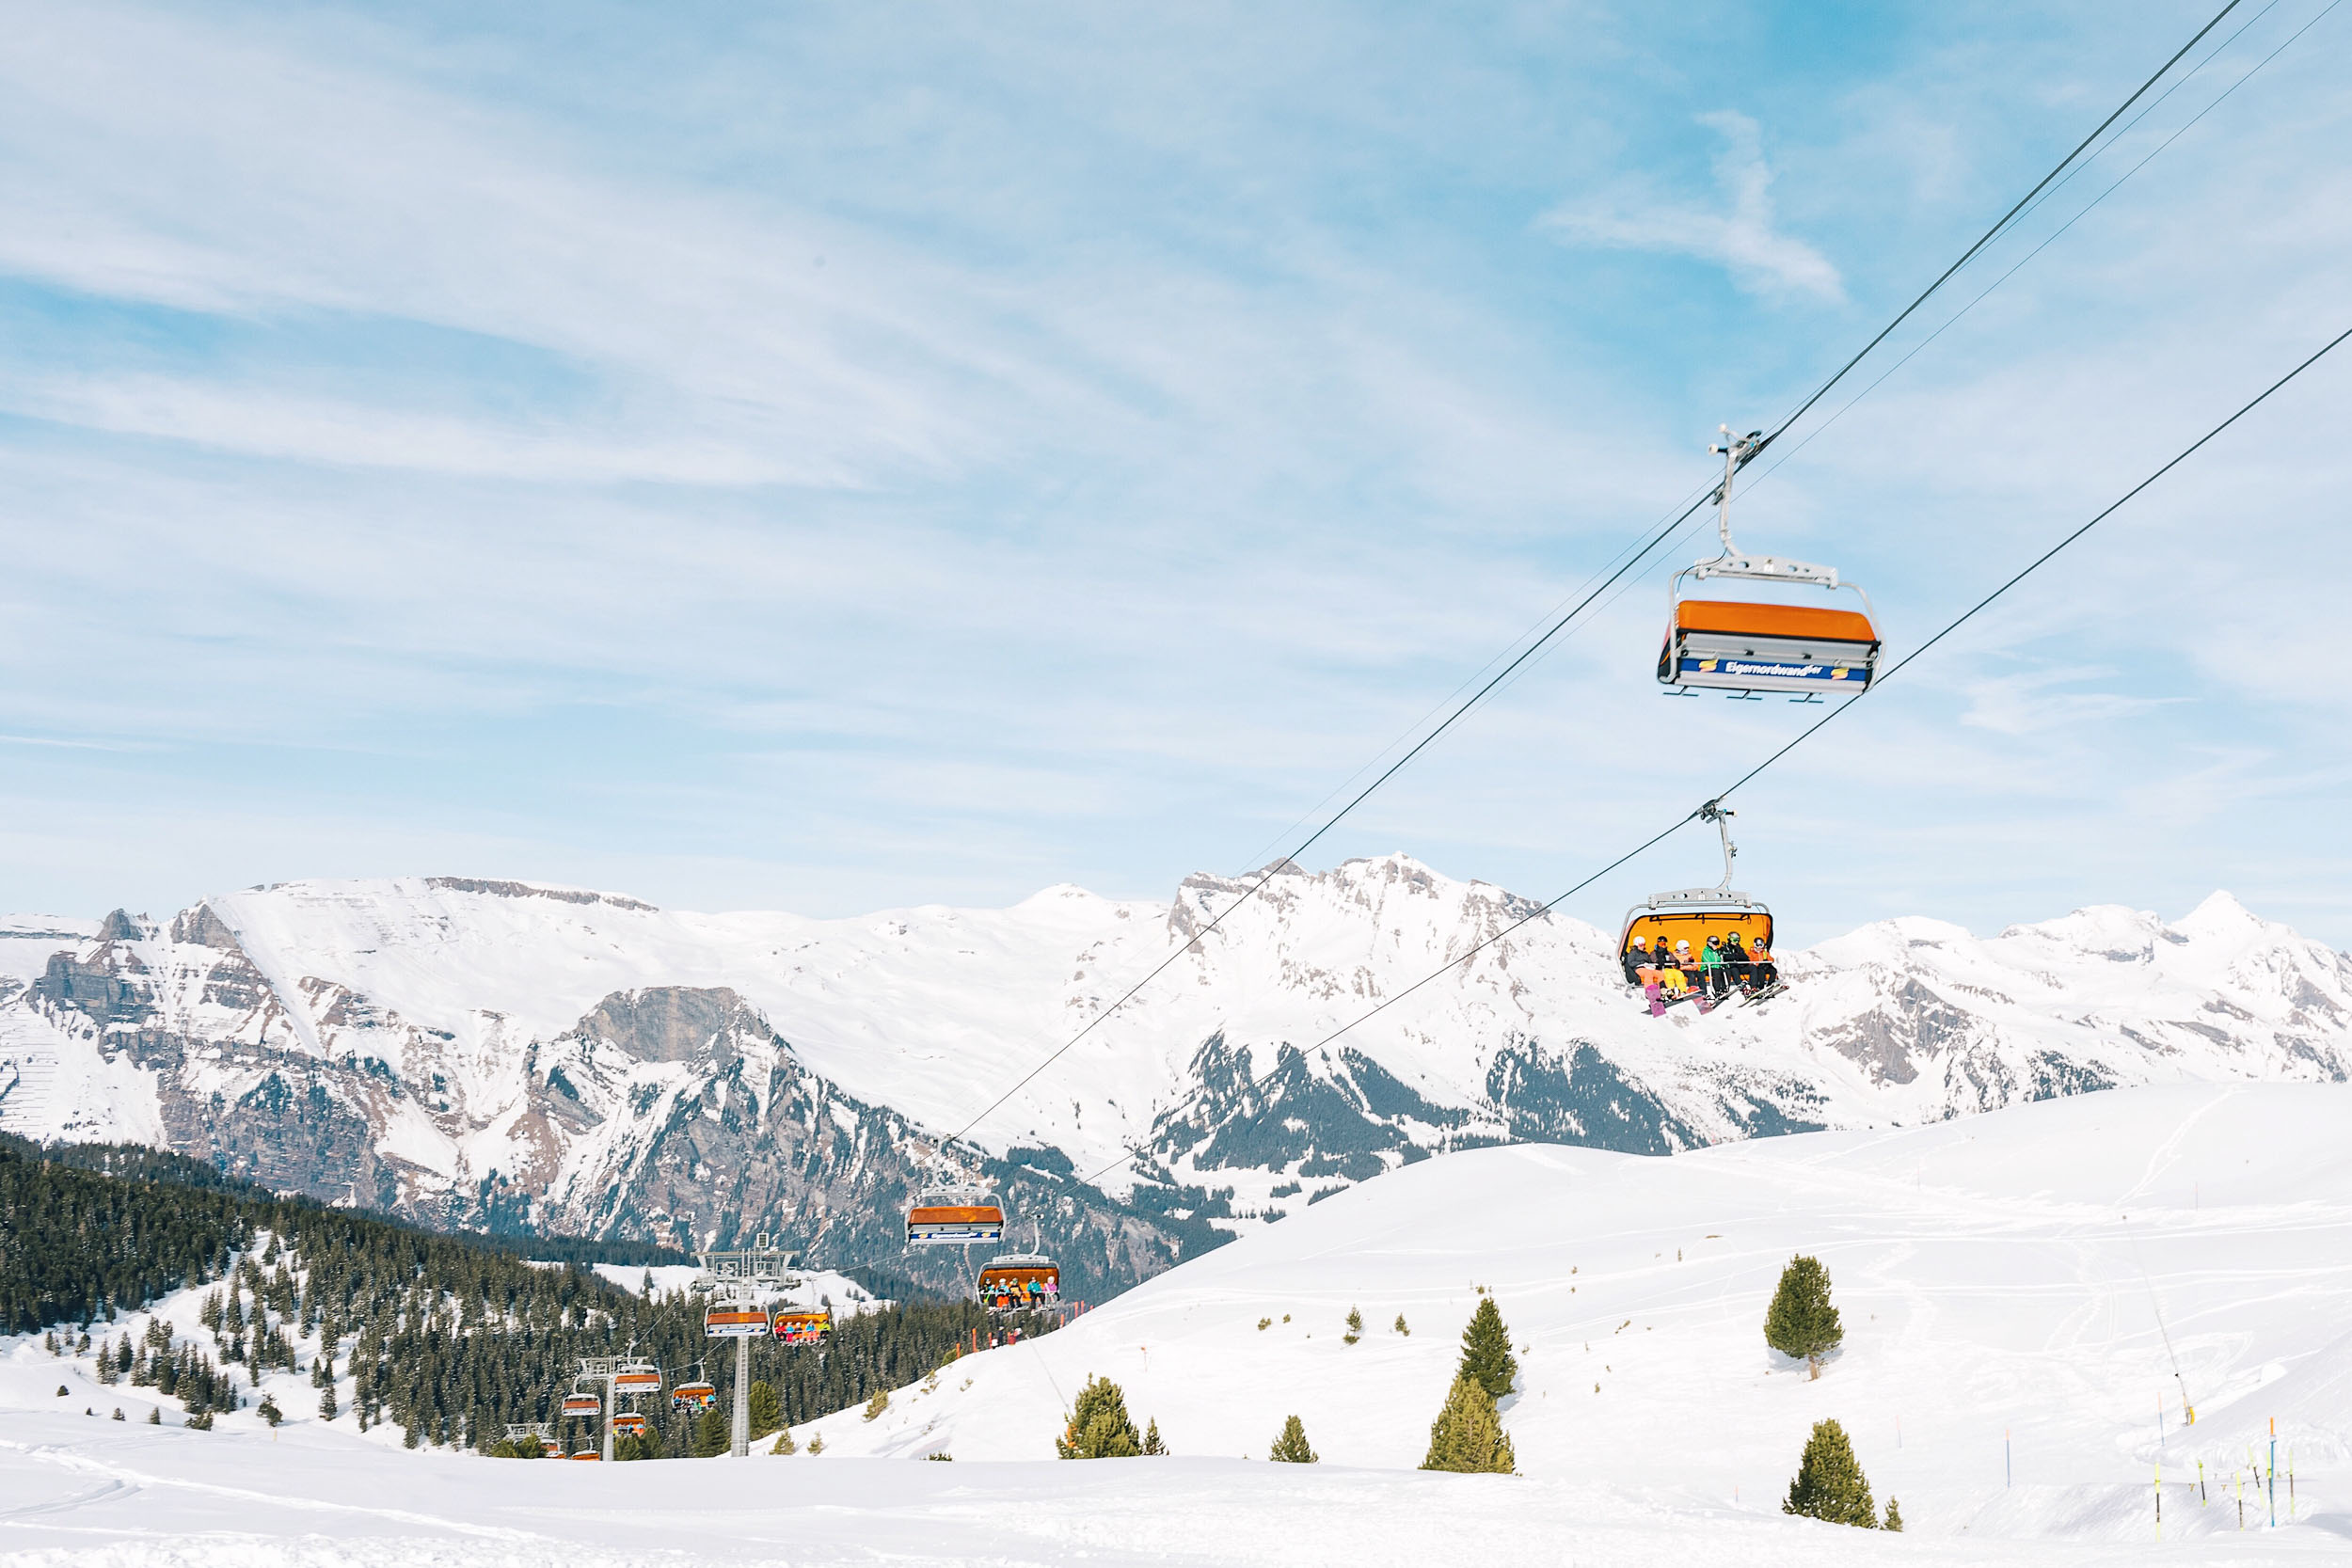 Jungfrau Region is full of countless different winter adventures!